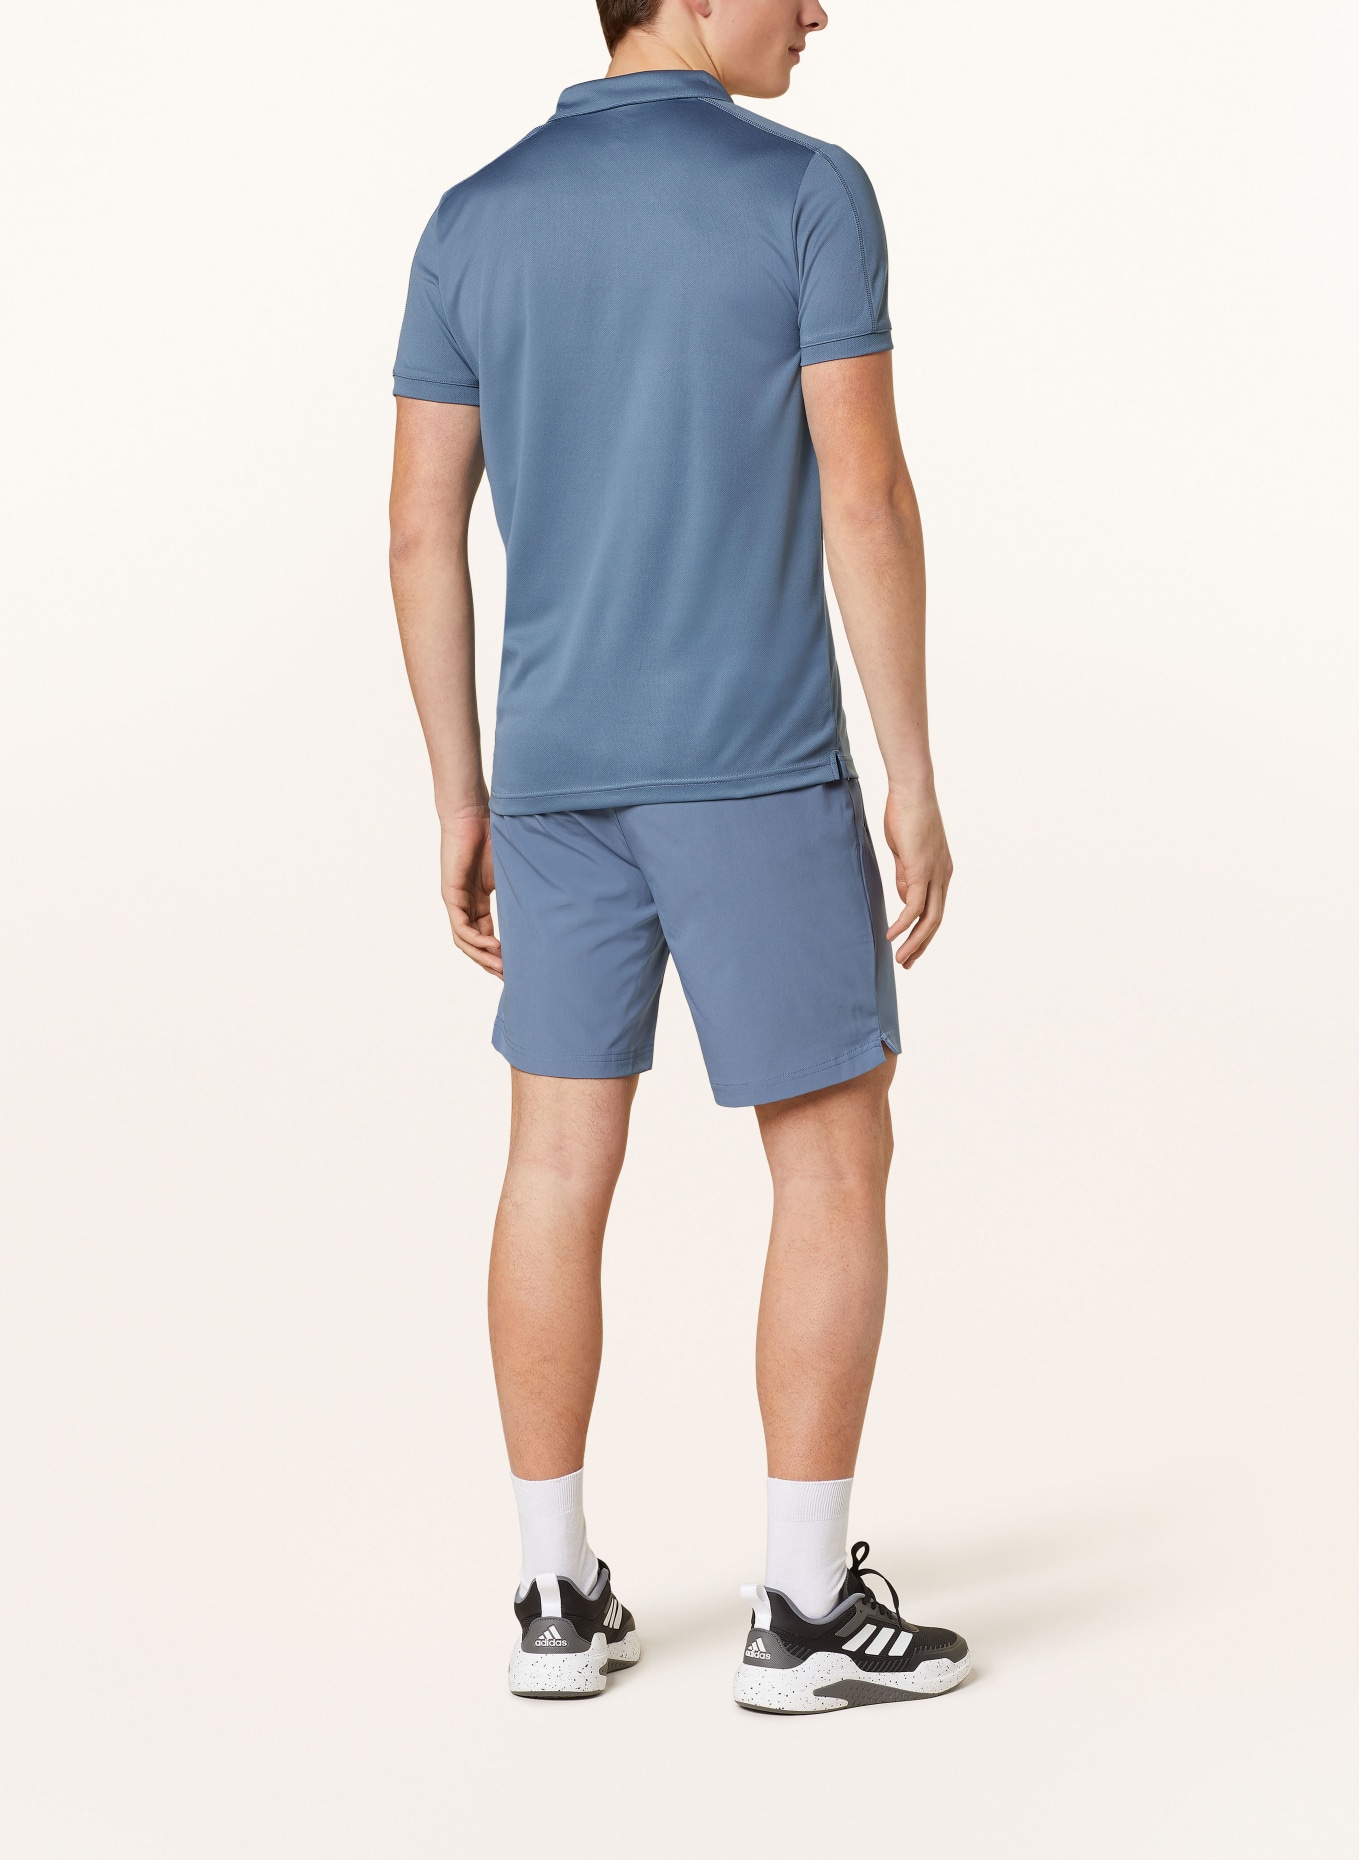 JOY sportswear Funktions-Poloshirt CLAAS, Farbe: BLAUGRAU (Bild 3)